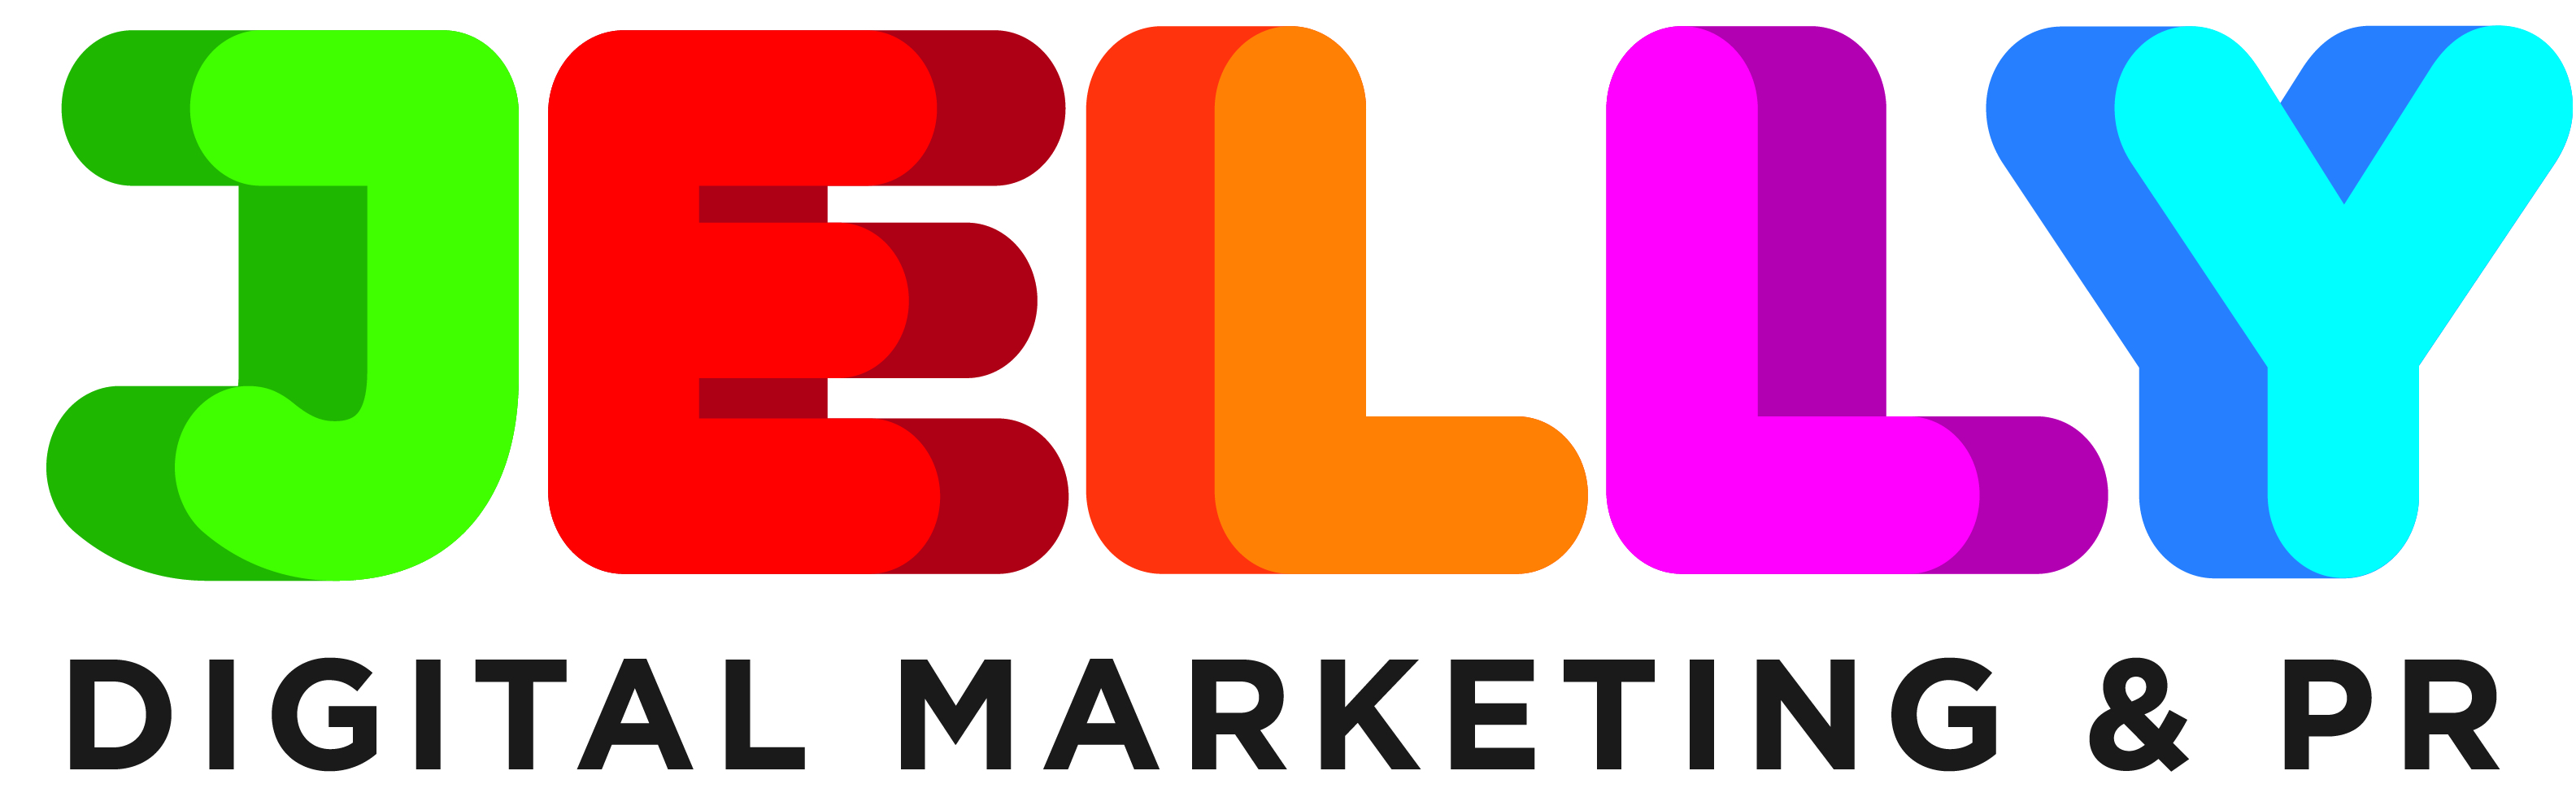 Jelly Marketing & PR Agency Logo